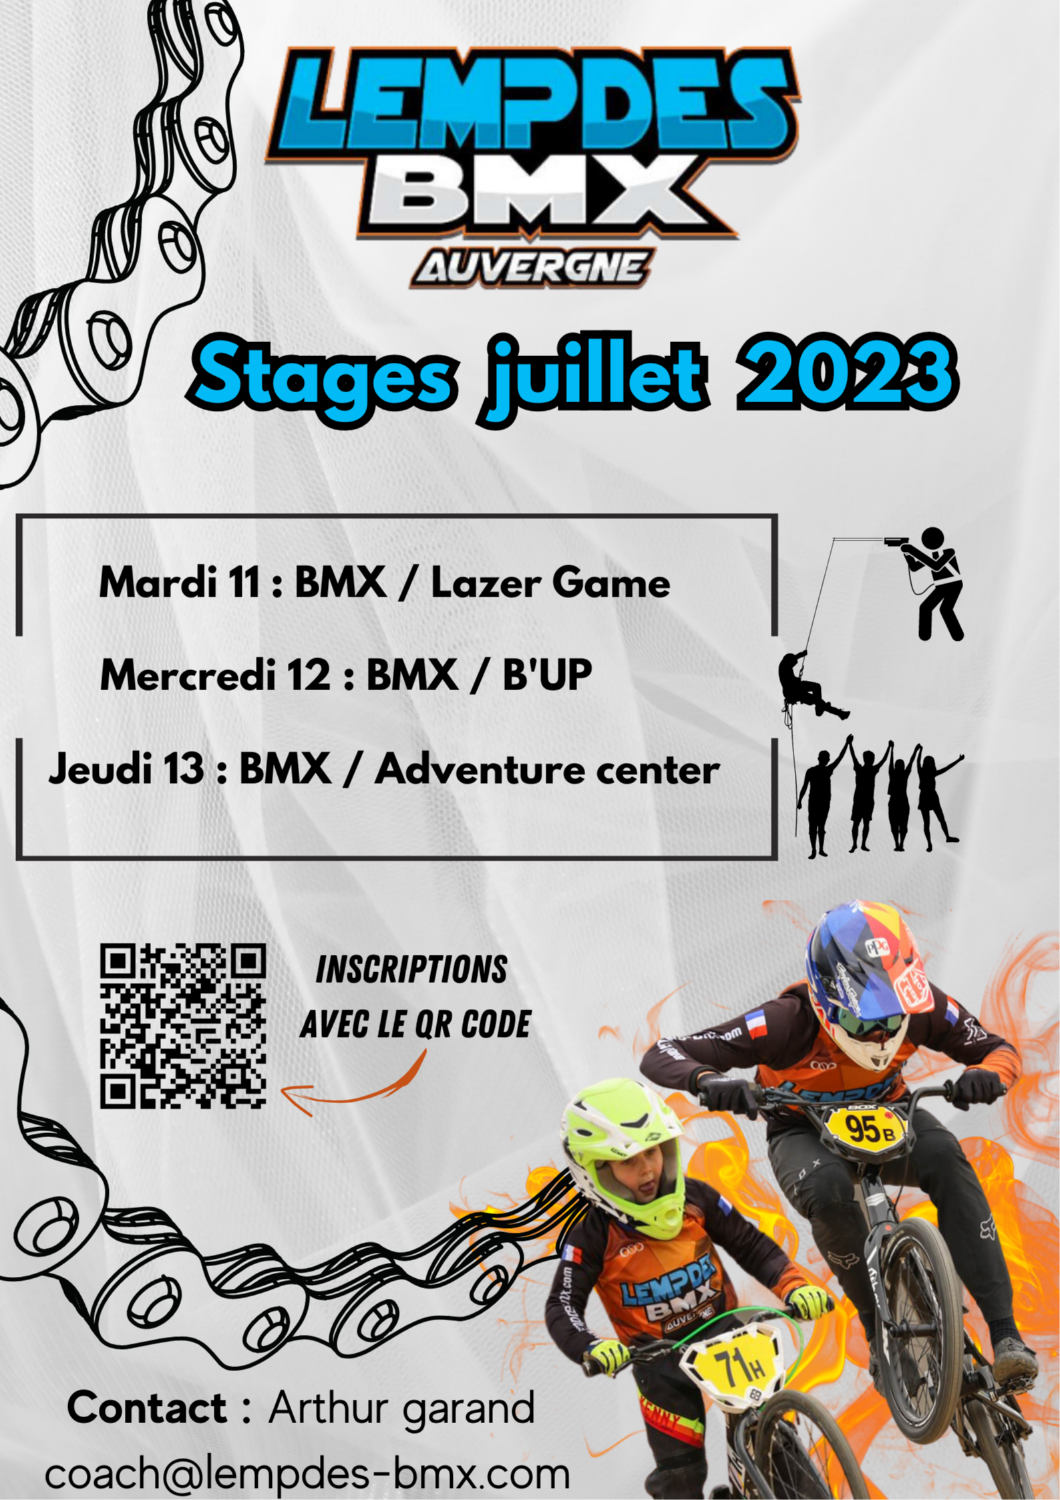 Stages Juillet 2023